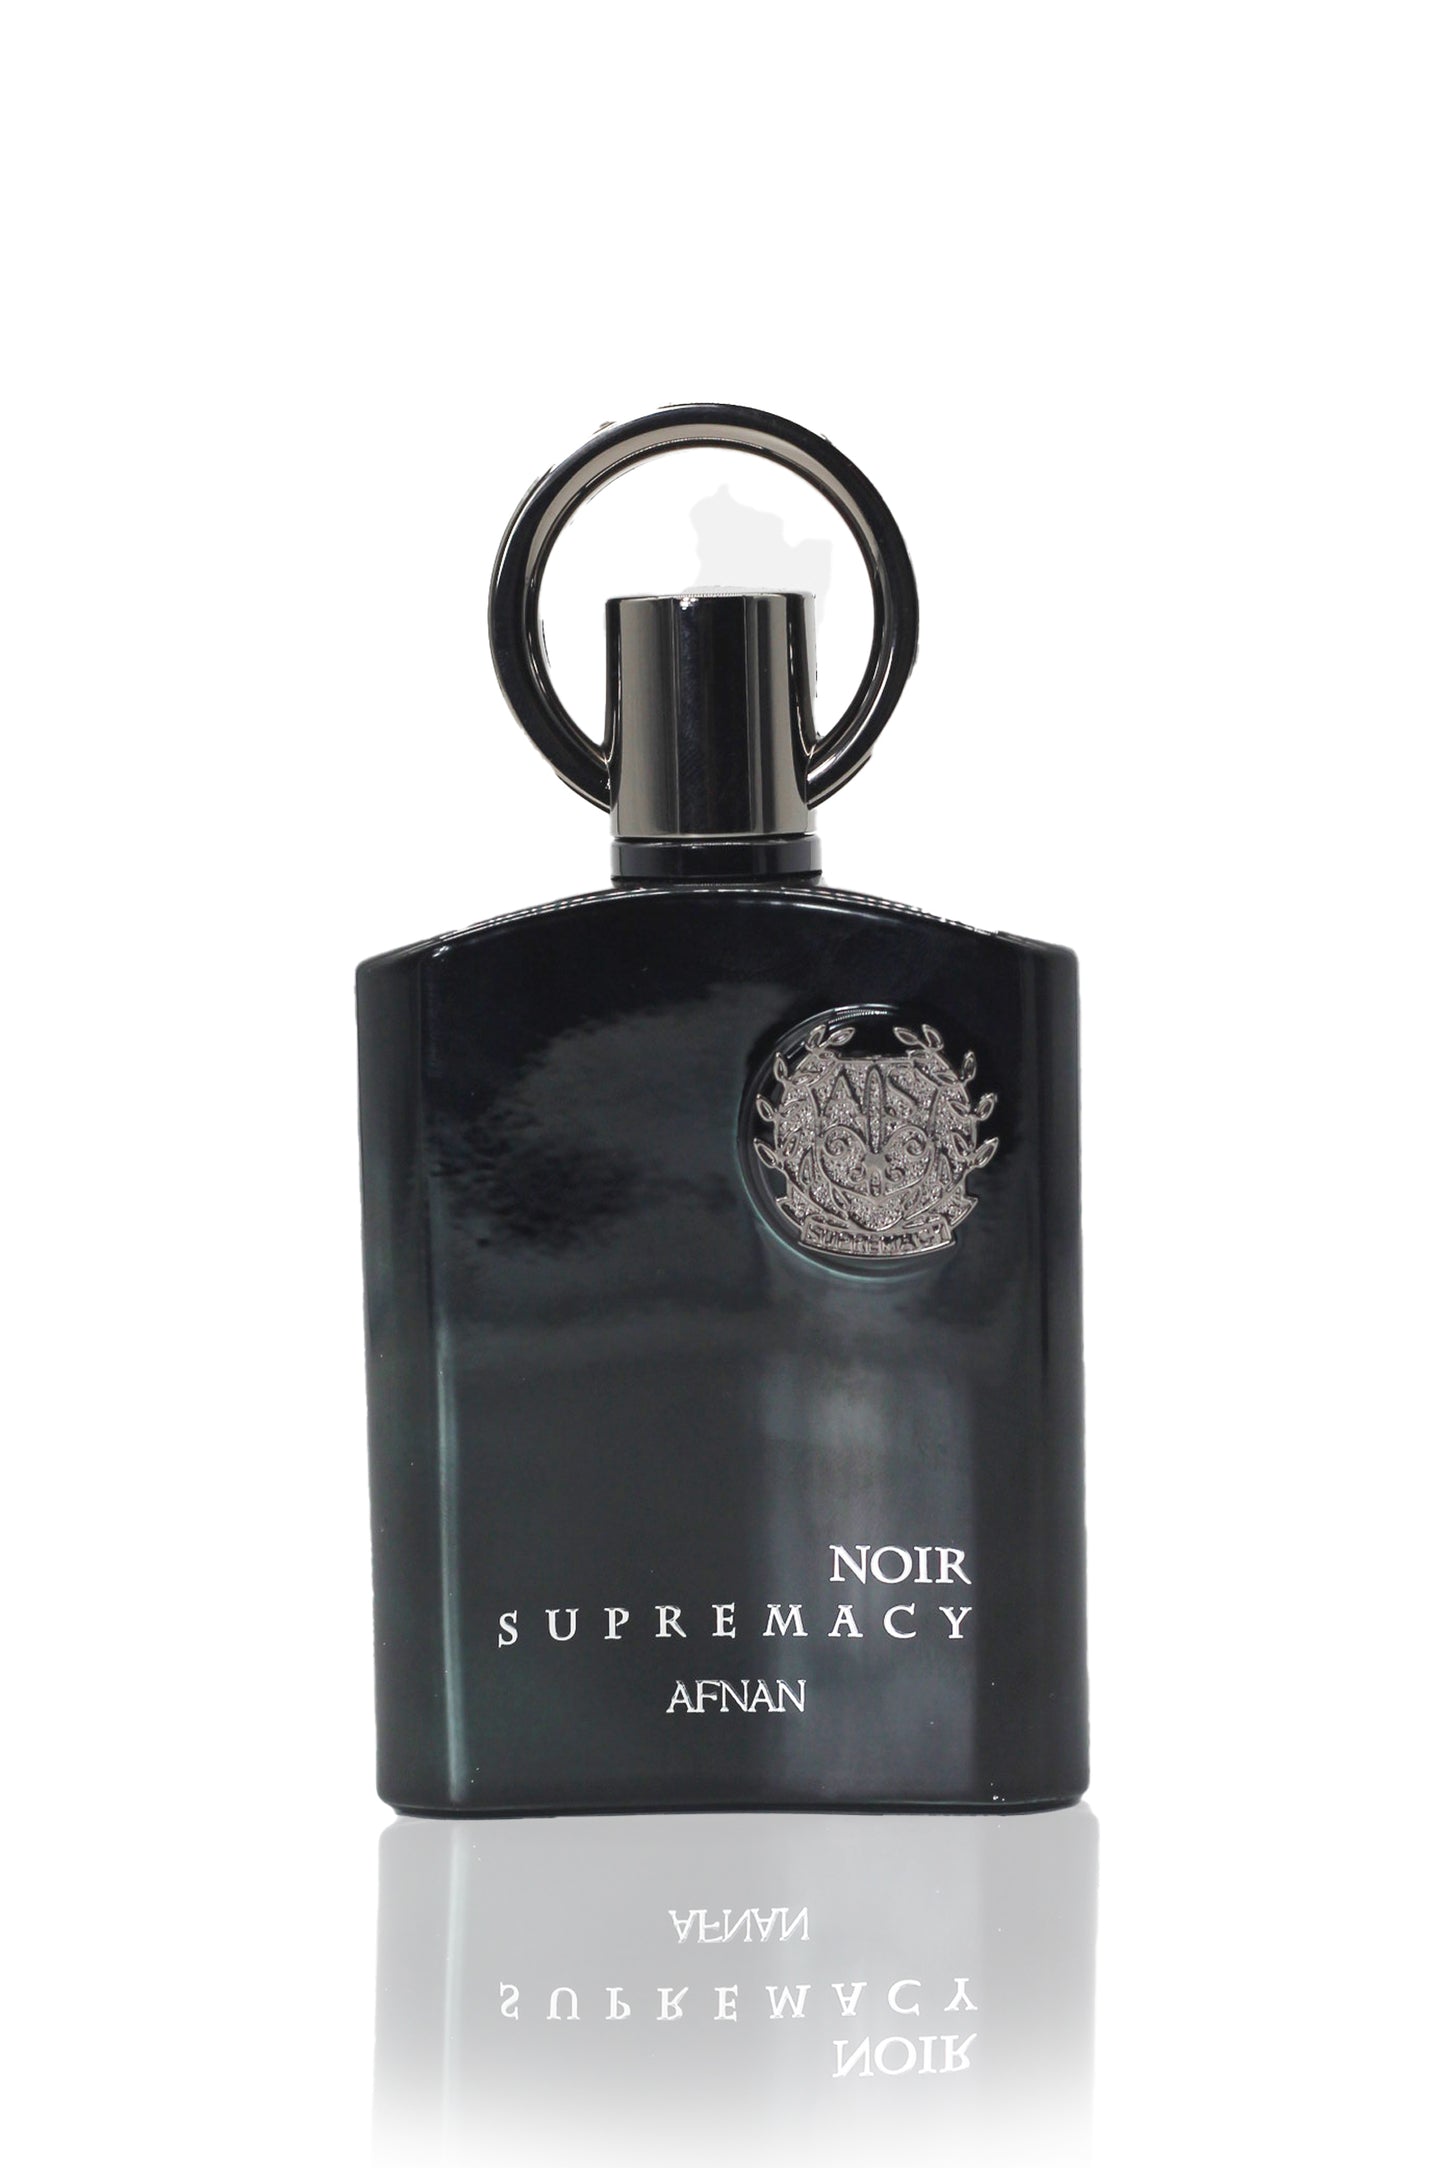 Afnan Supremacy Noir Perfume 100ml EDP by Afnan